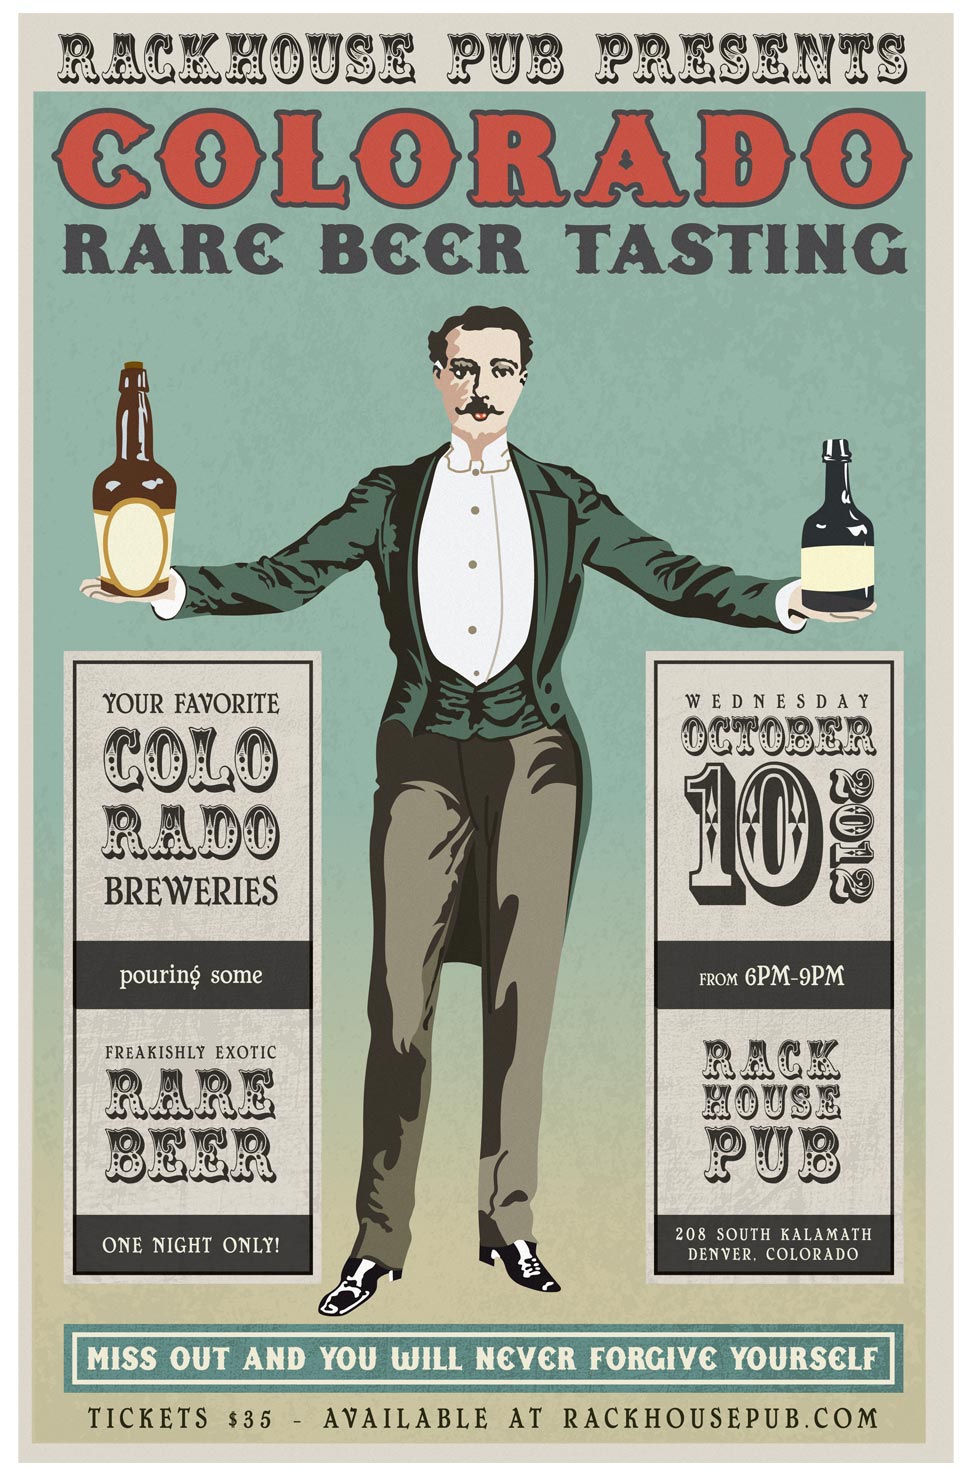 Rackhouse-Pub-Colorado-Rare-Beer-Tasting-2012-Poster-Mobile